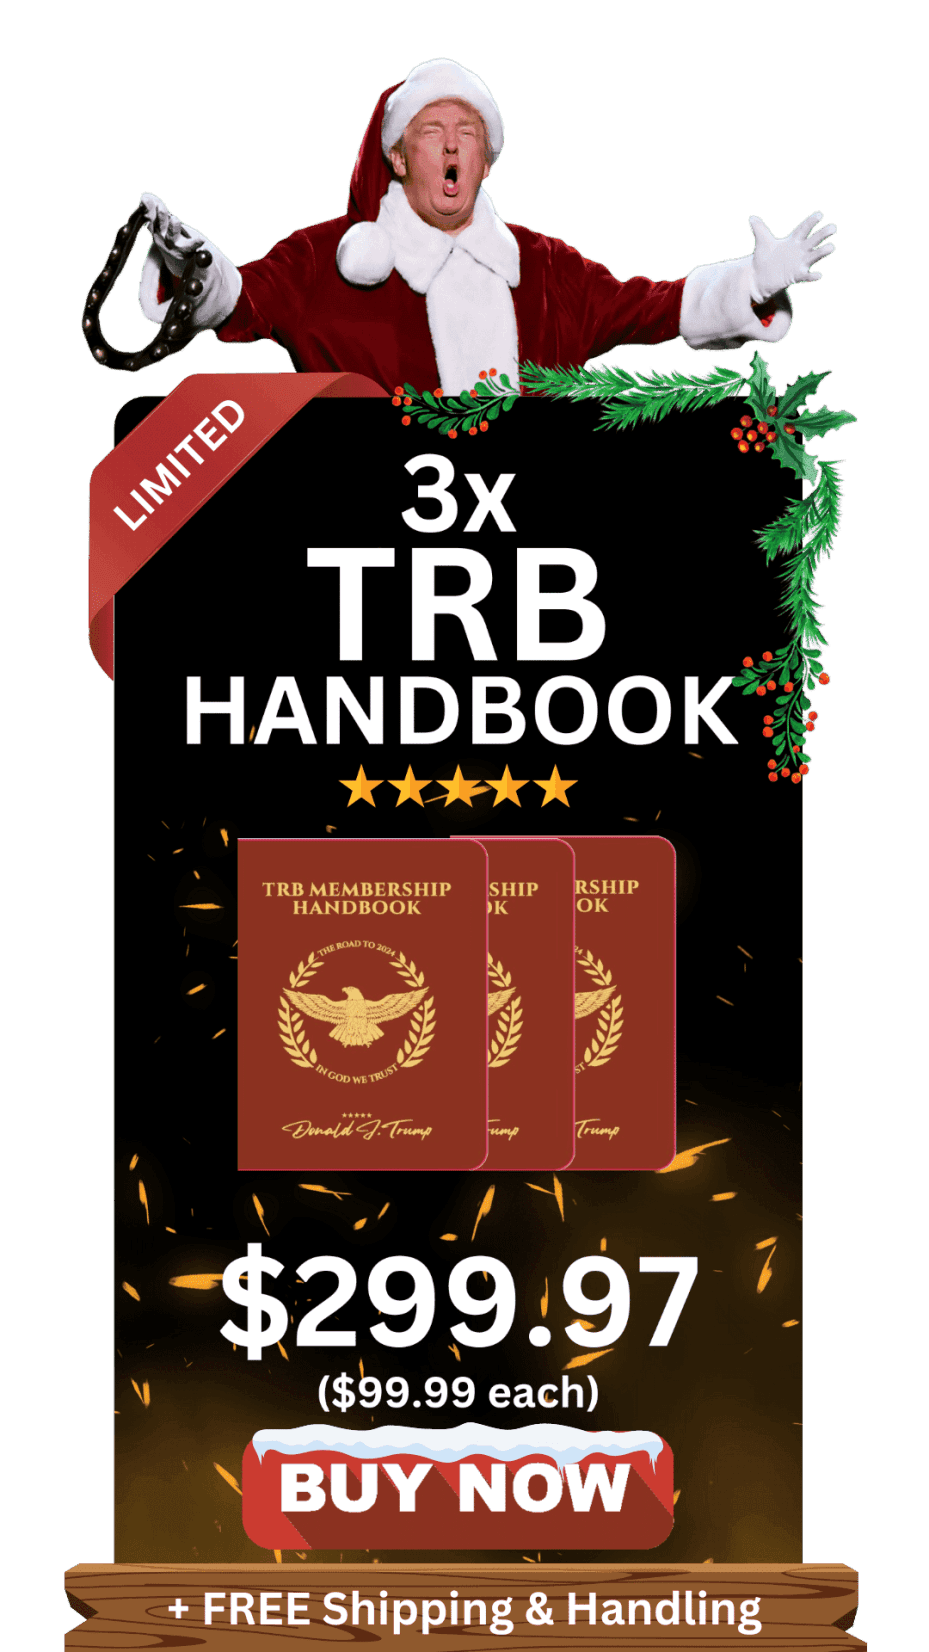 TRB Membership Handbook buy 3x